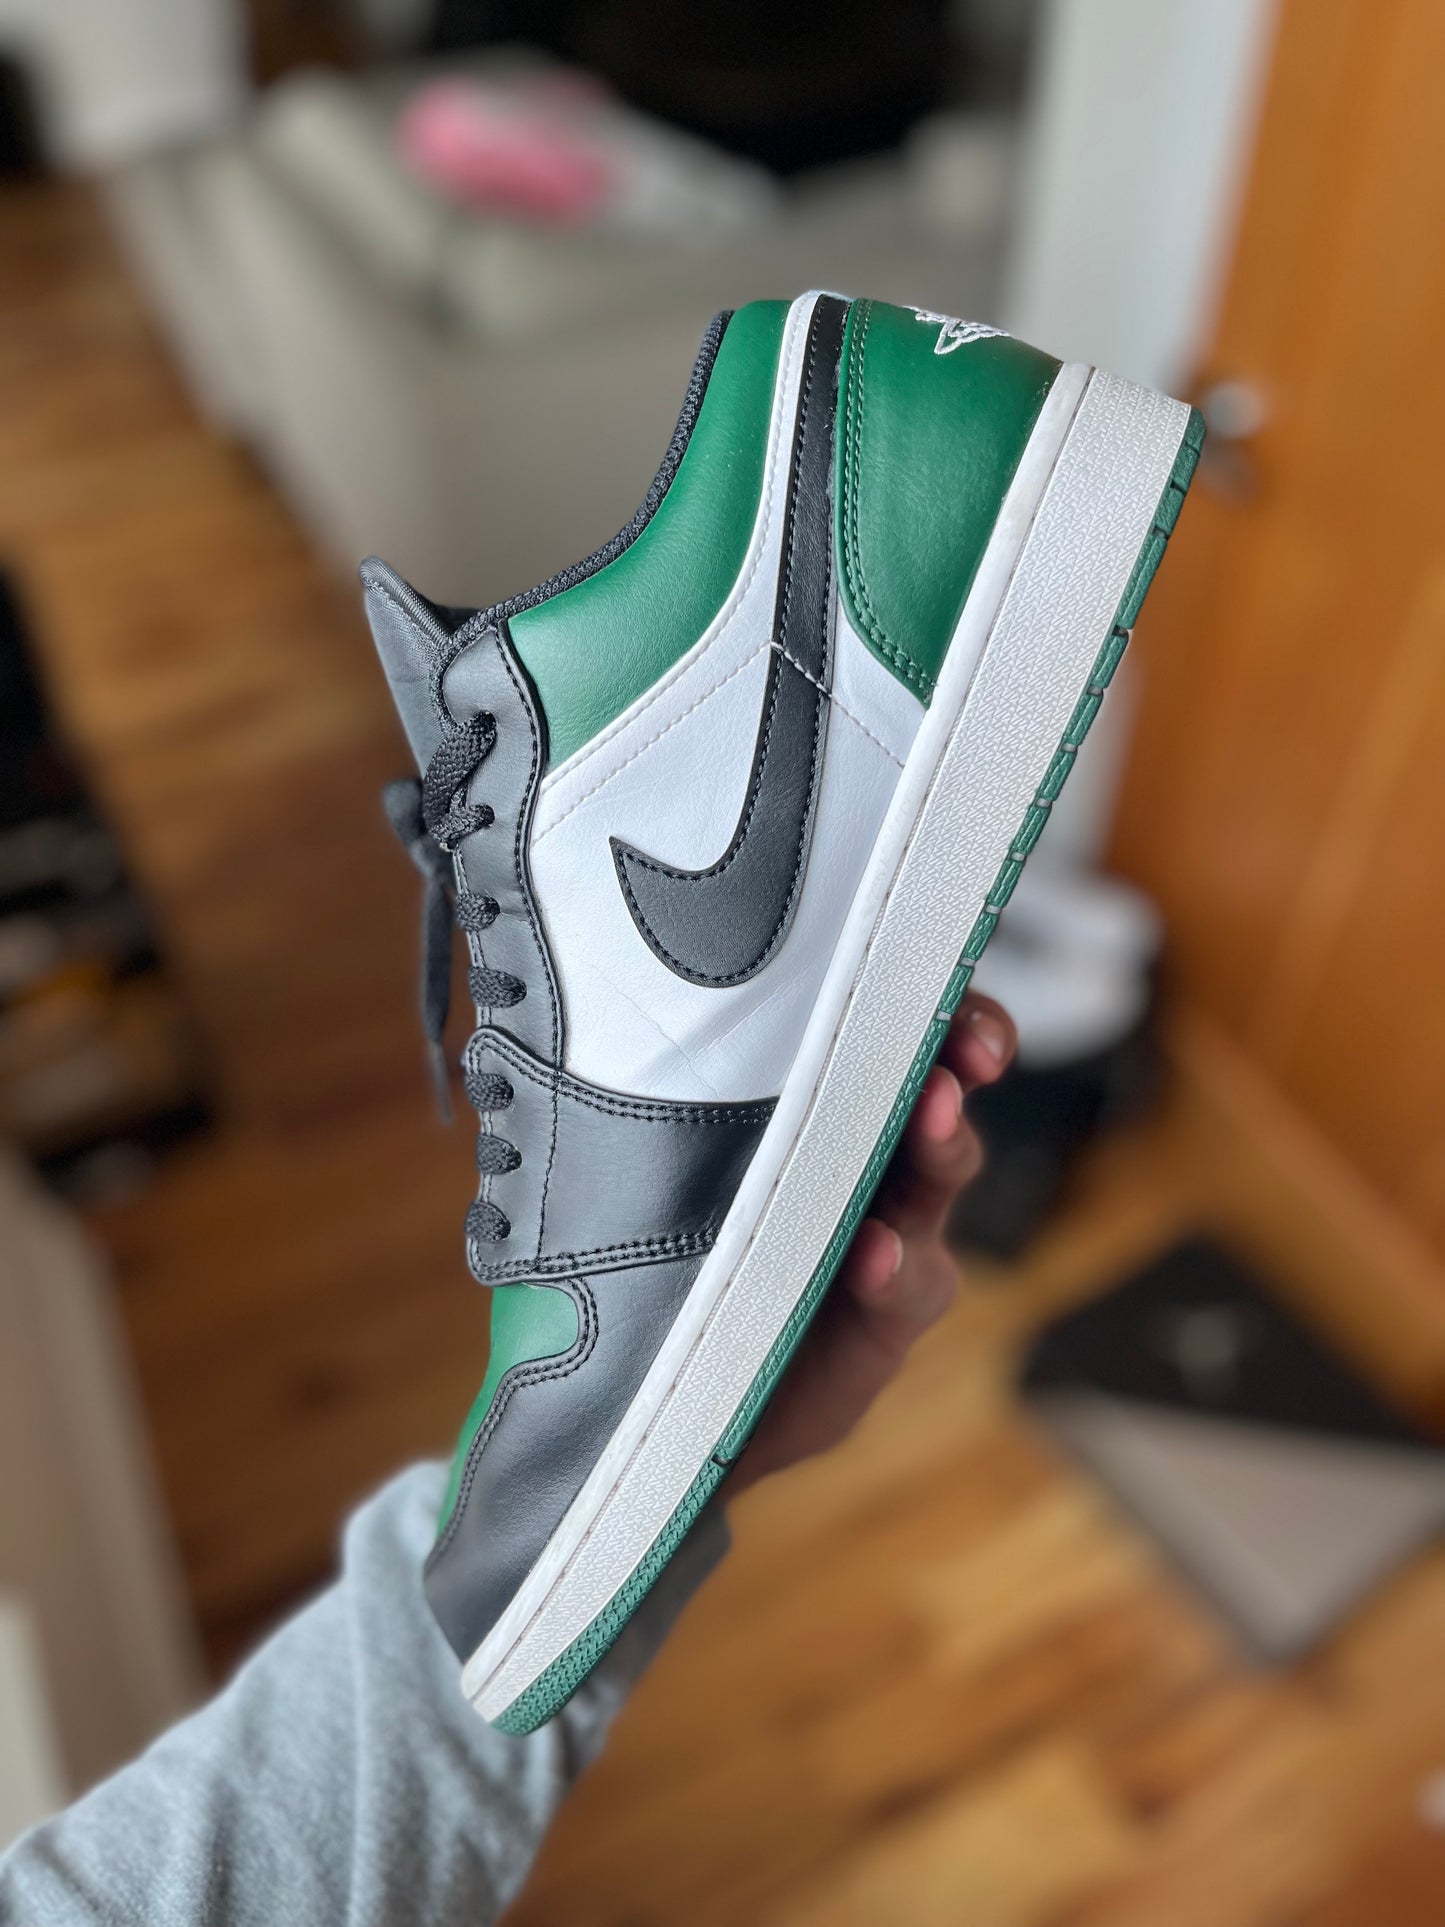 AJ1 ‘Green Toe’ (size 12)